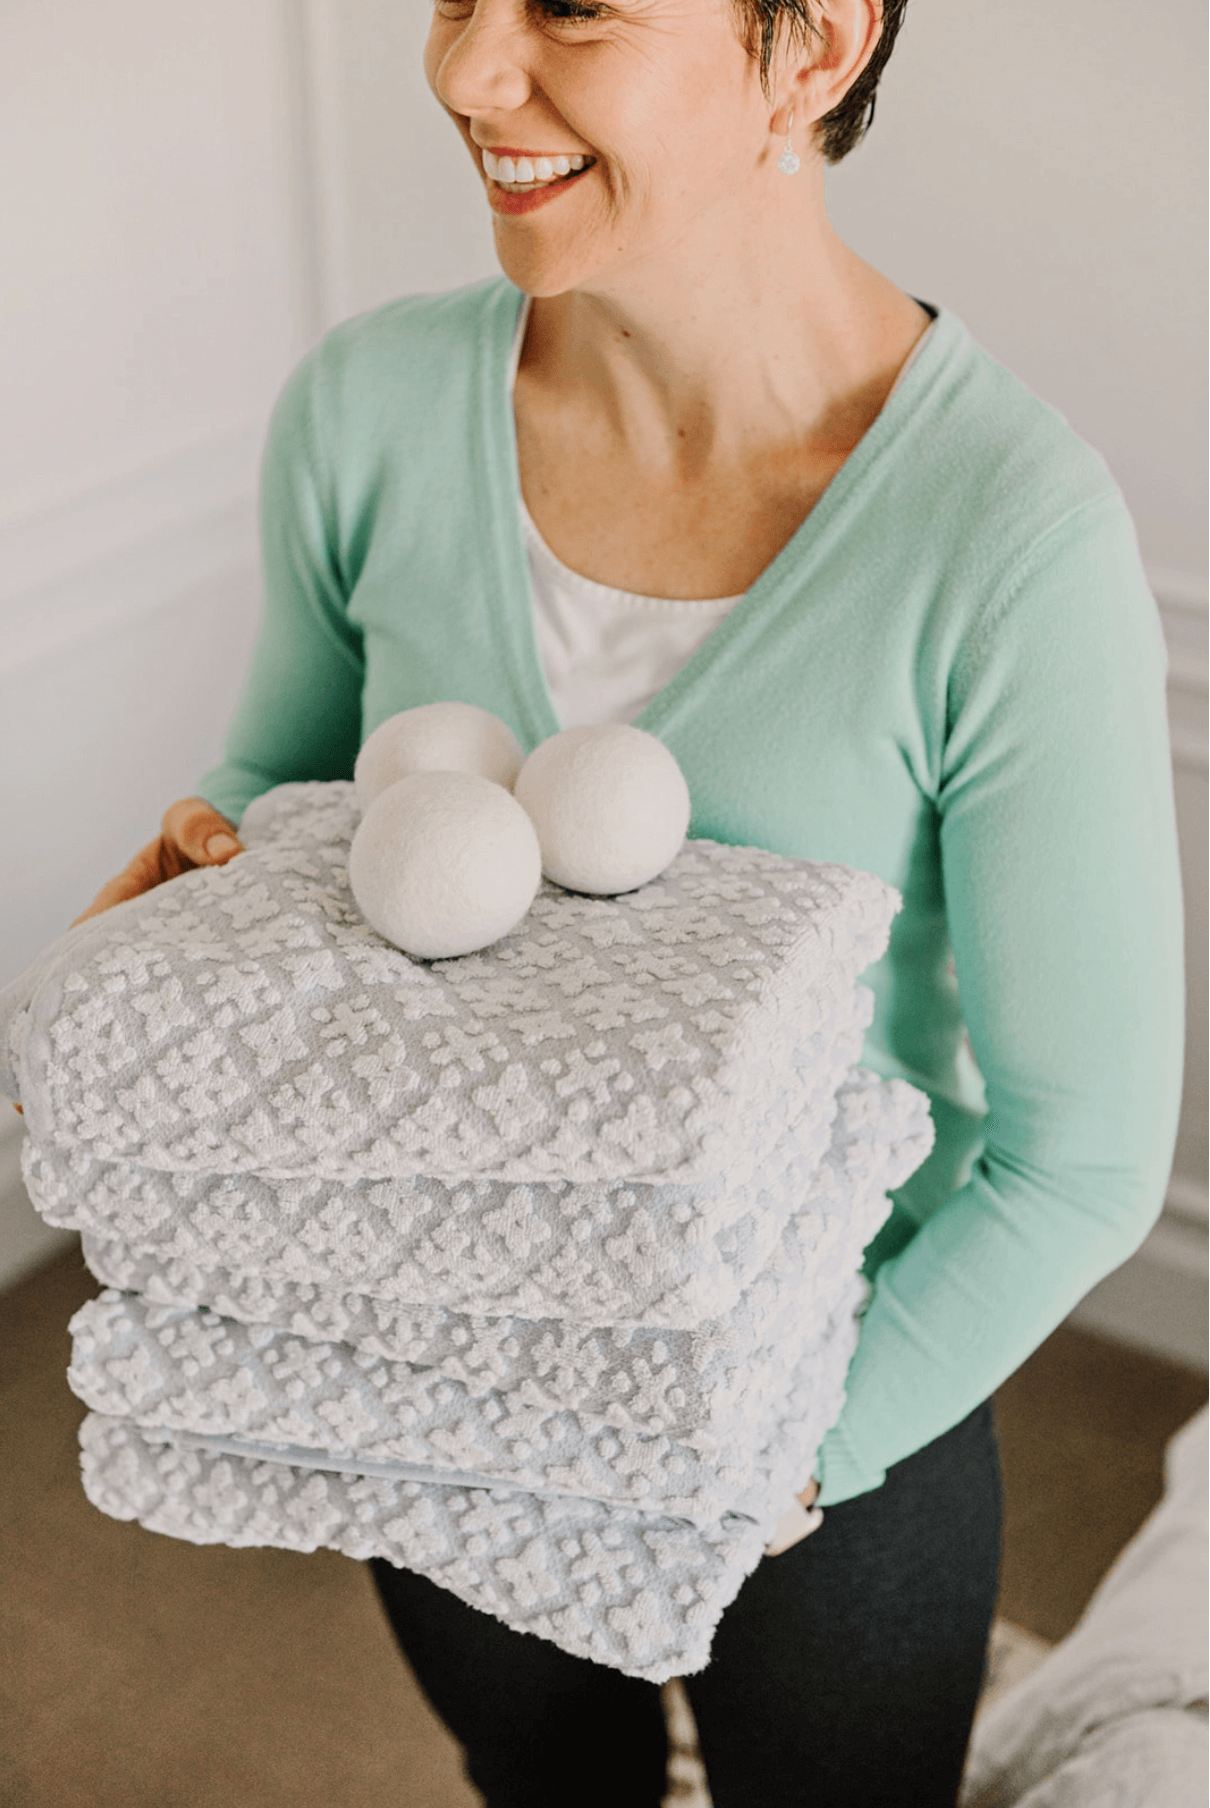 Smart Sheep Dryer Balls